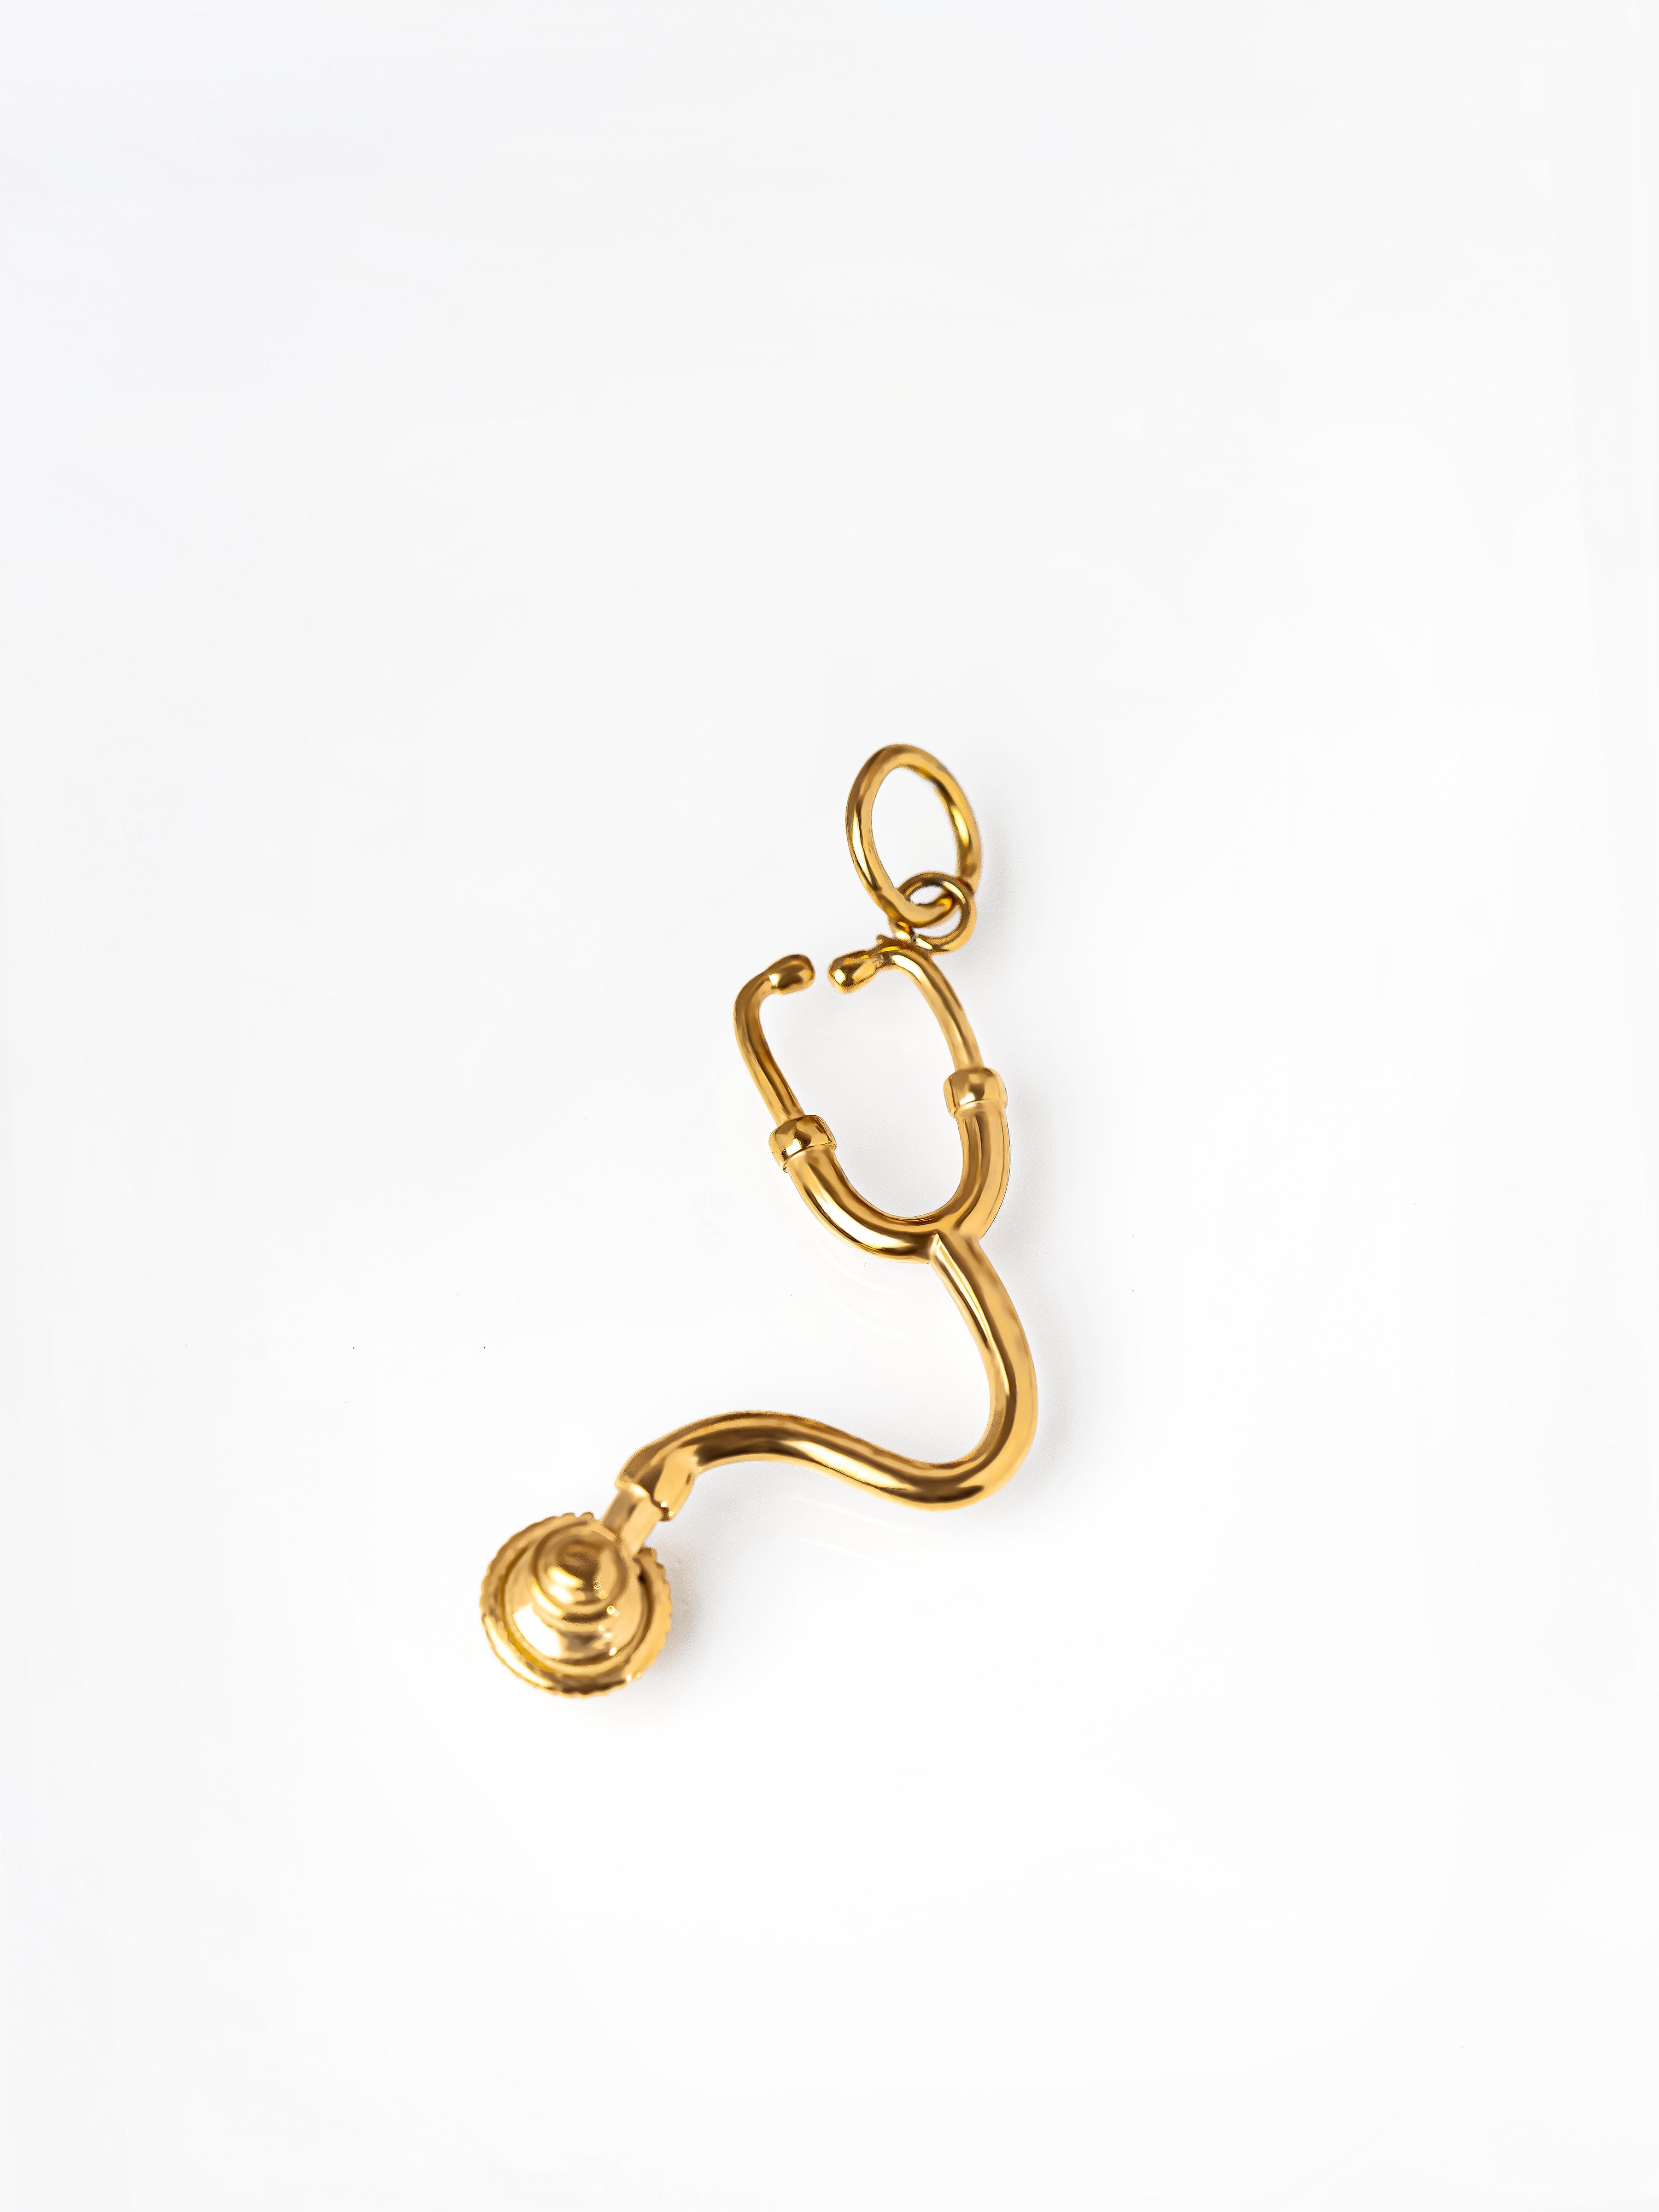 Gold Stethoscope Pendant / Charm